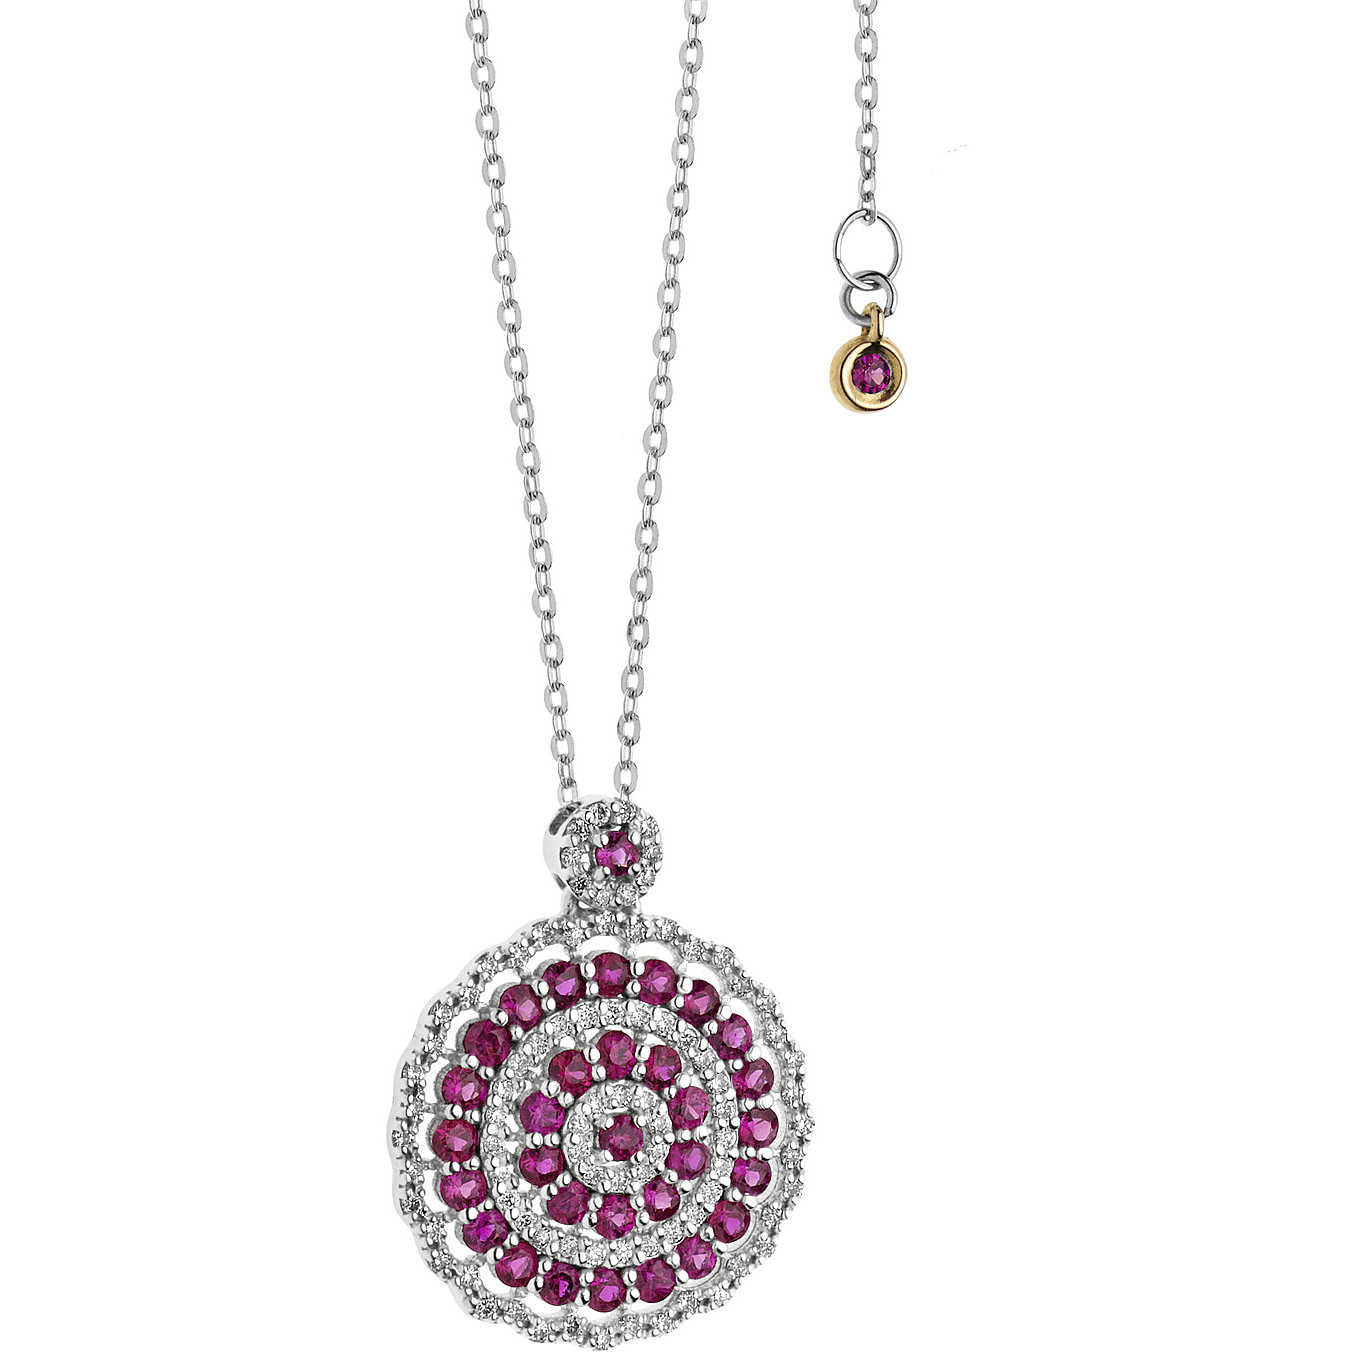 GLB 1110 Diamond Rose Jewelry Necklace for Women